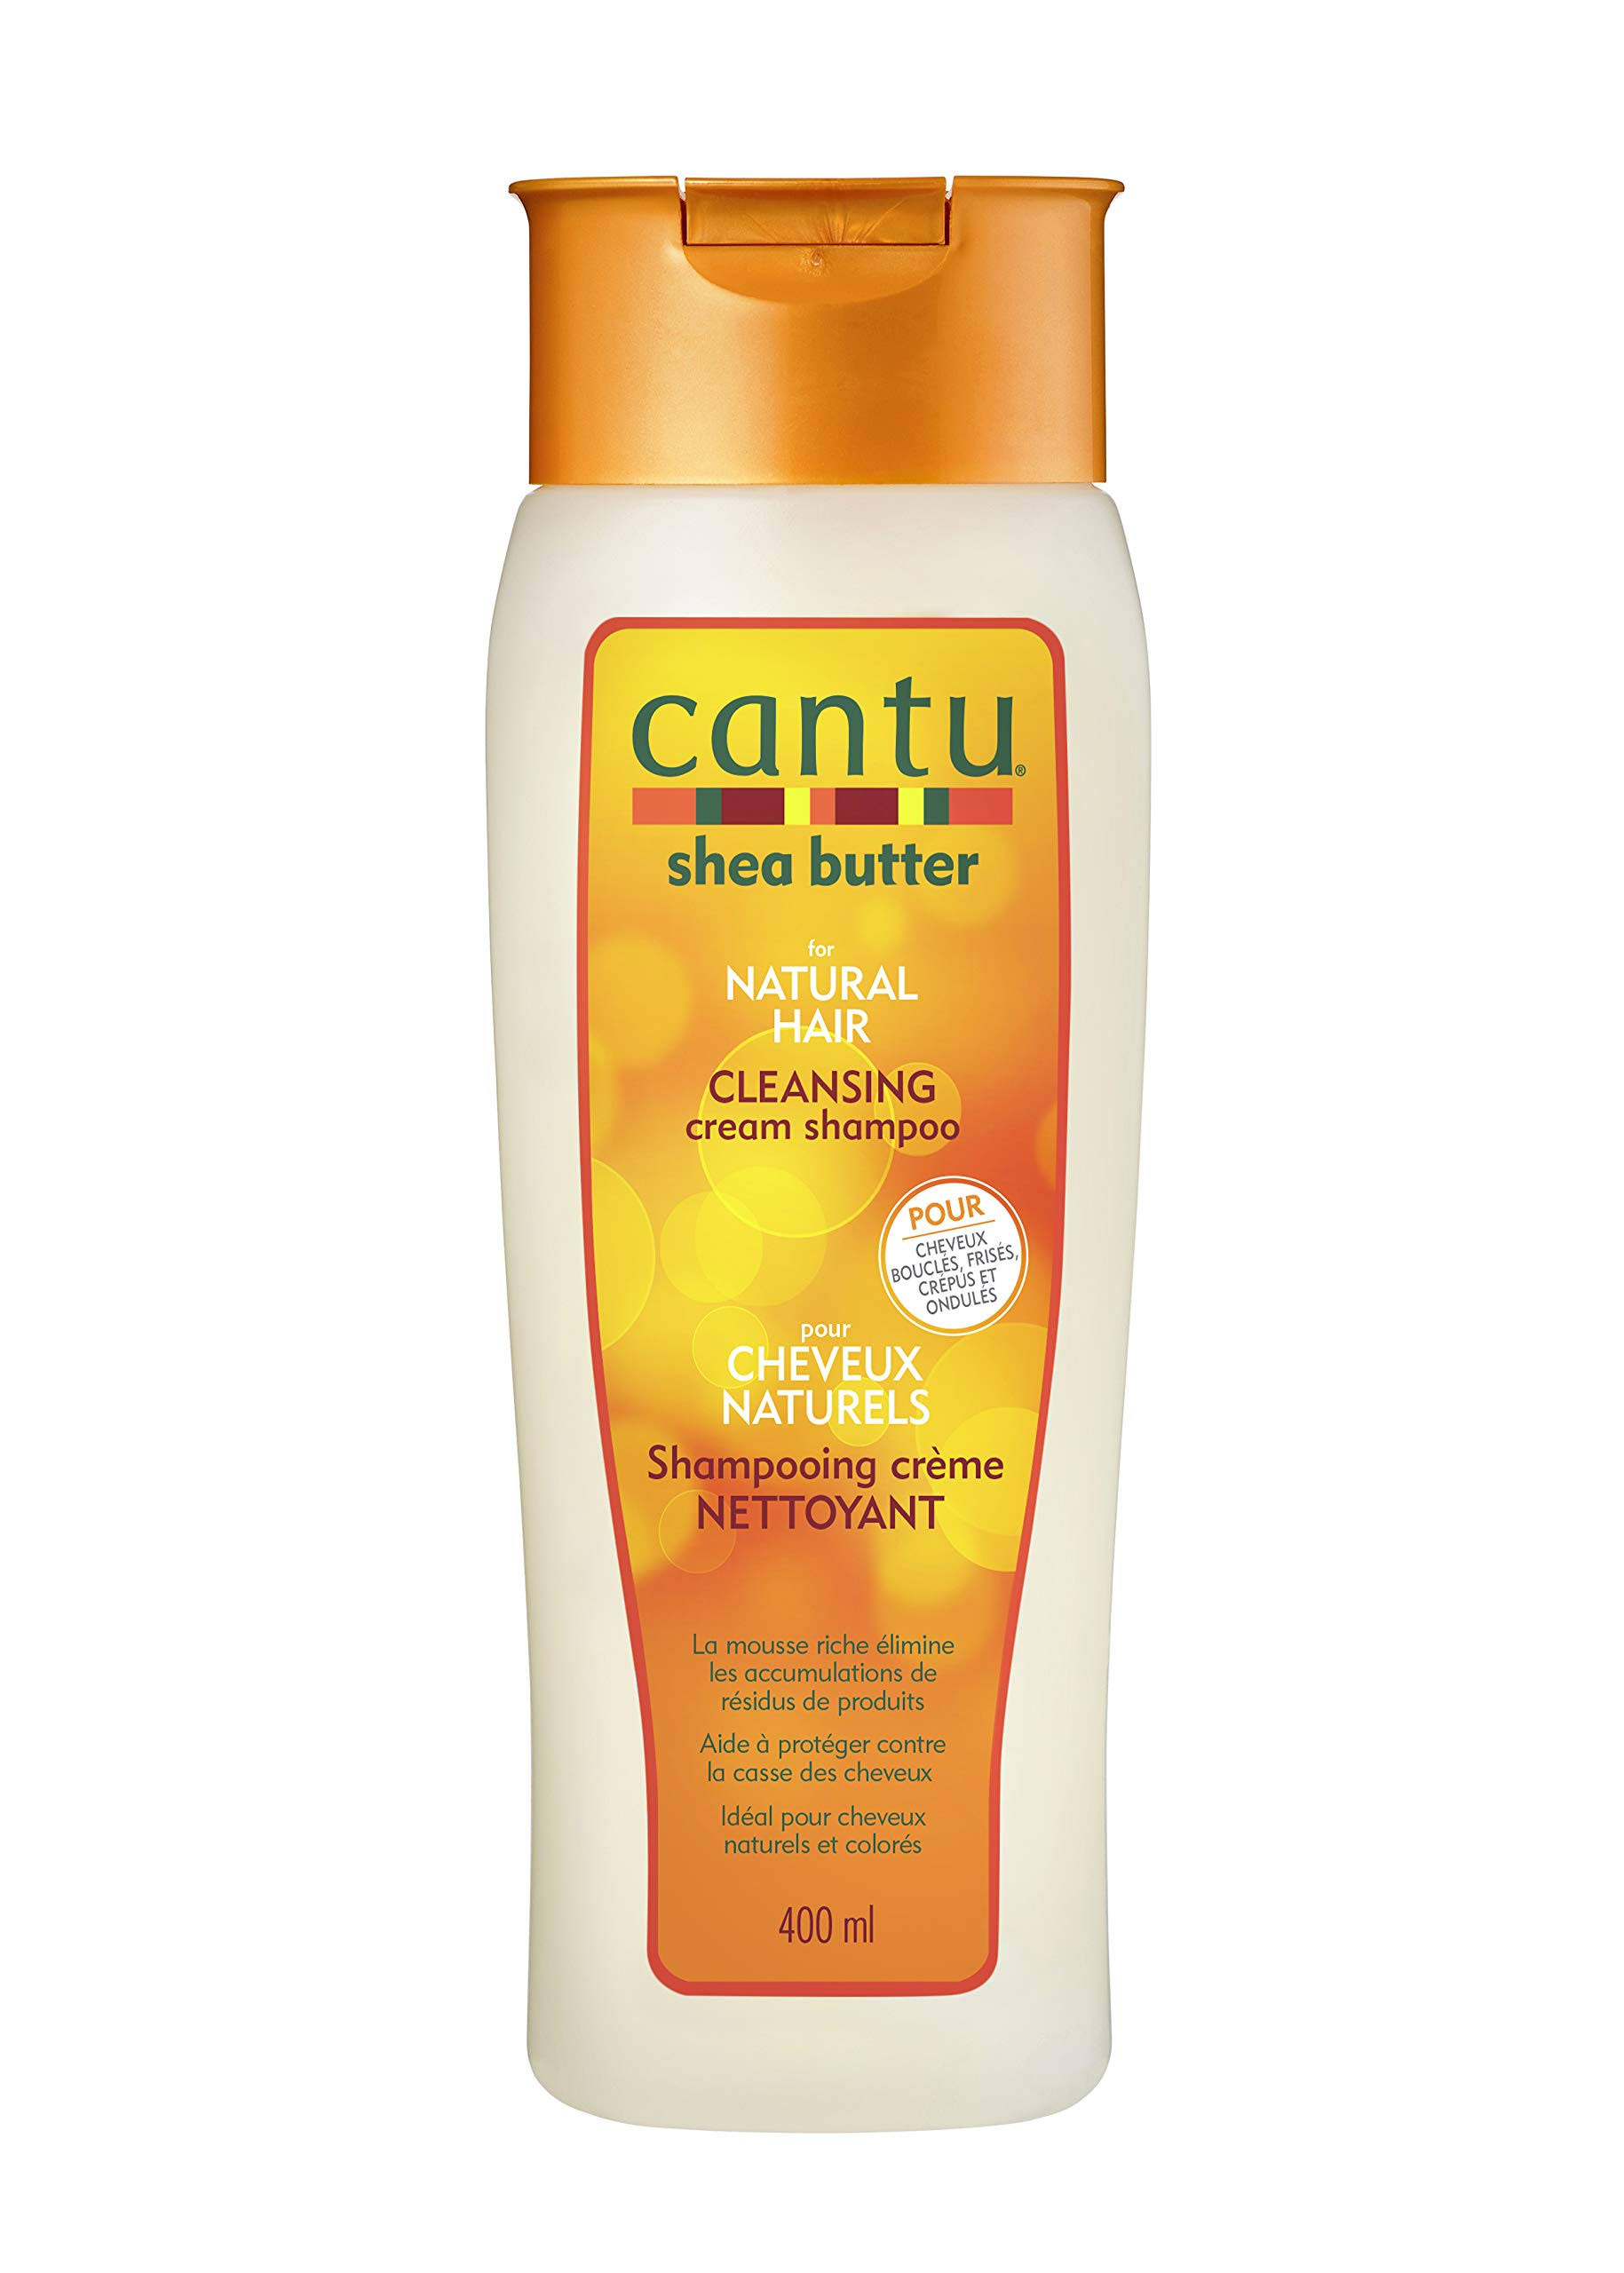 Cantu Shea Butter Shampoo, Cleansing Cream, Sulfate-Free, for Natural Hair - 13.5 fl oz